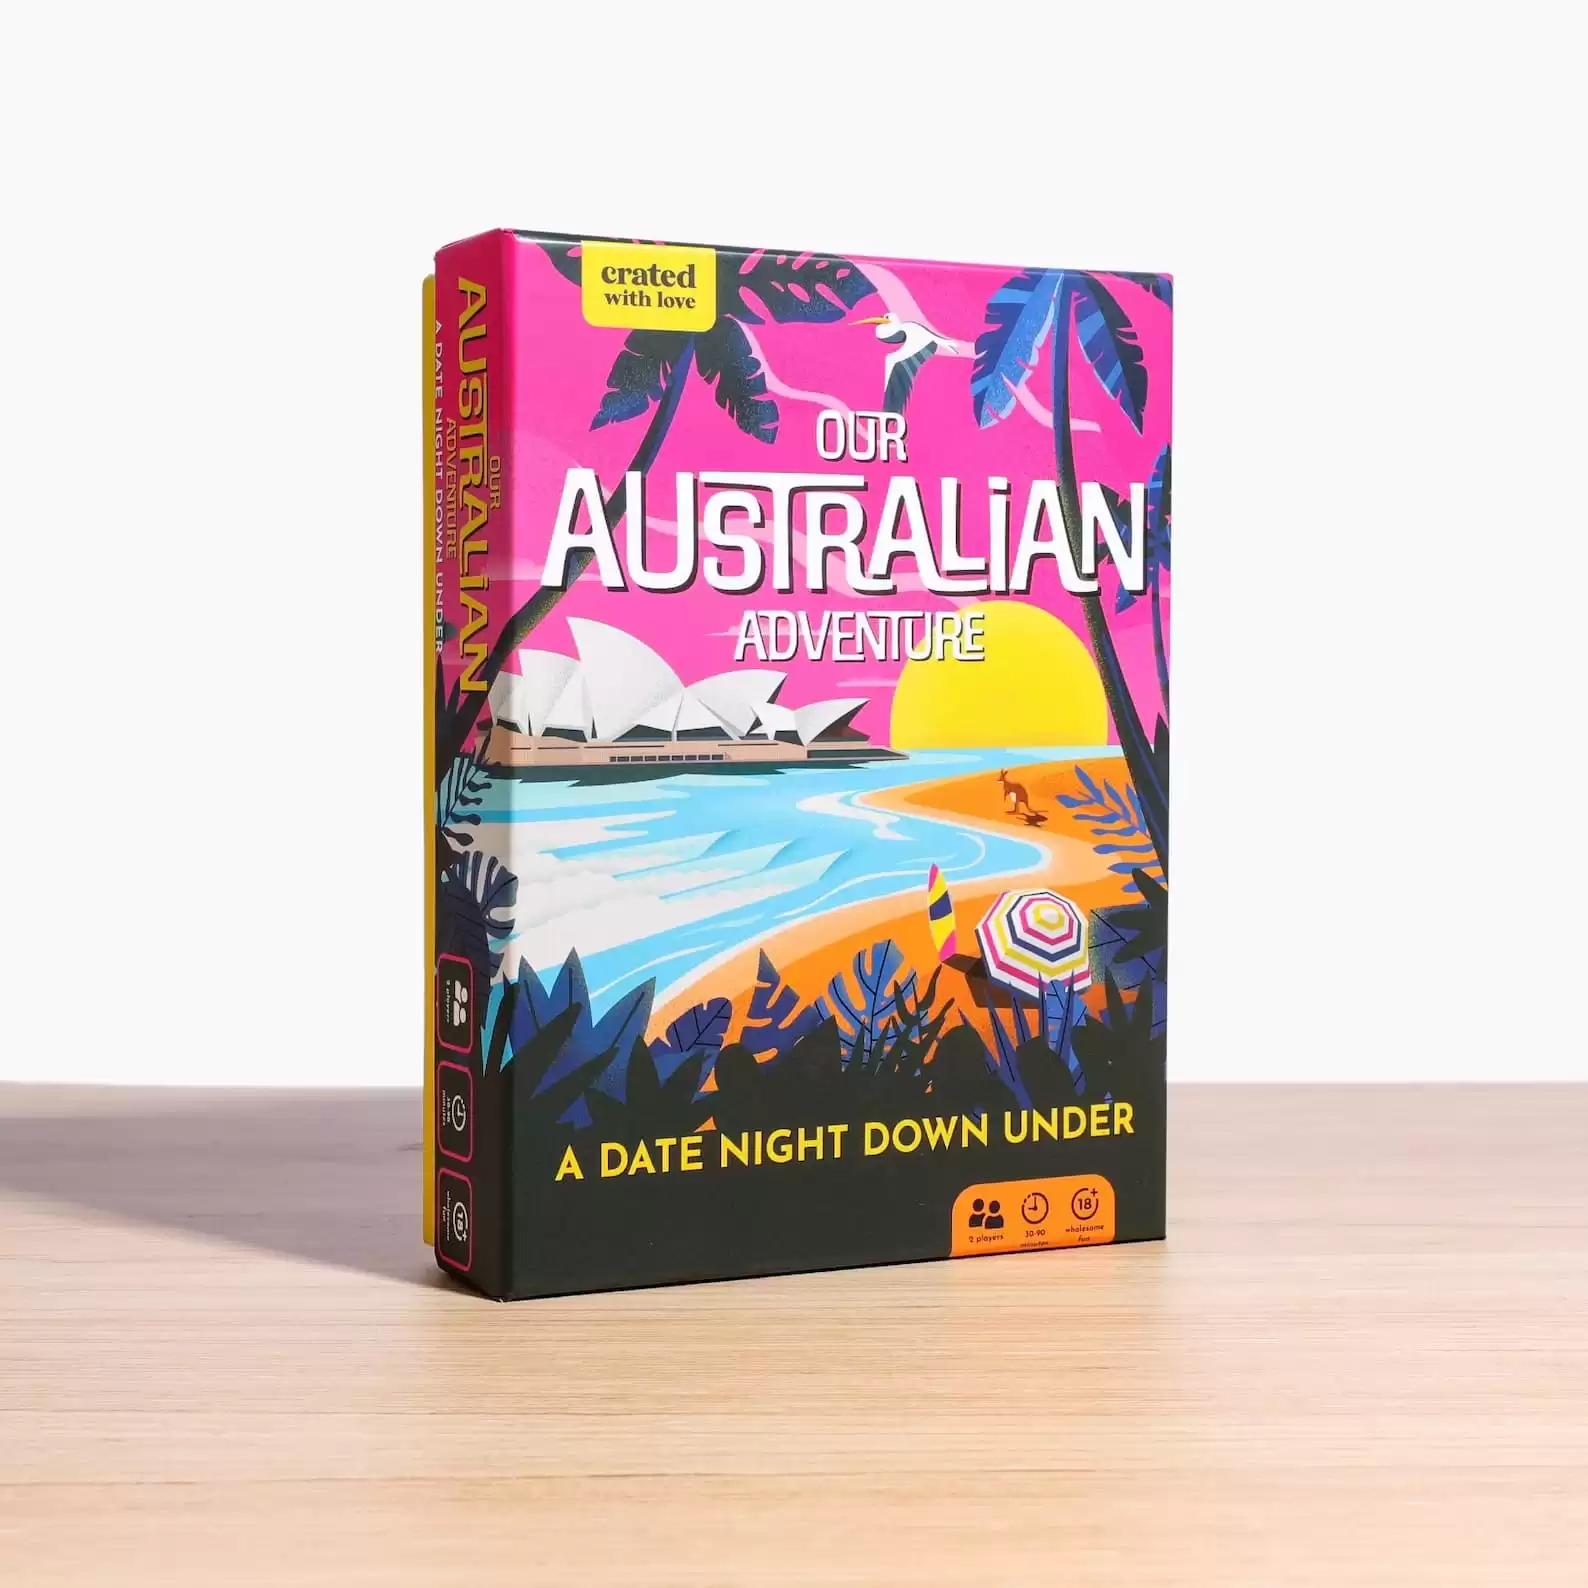 Australian-Themed Game for Couples